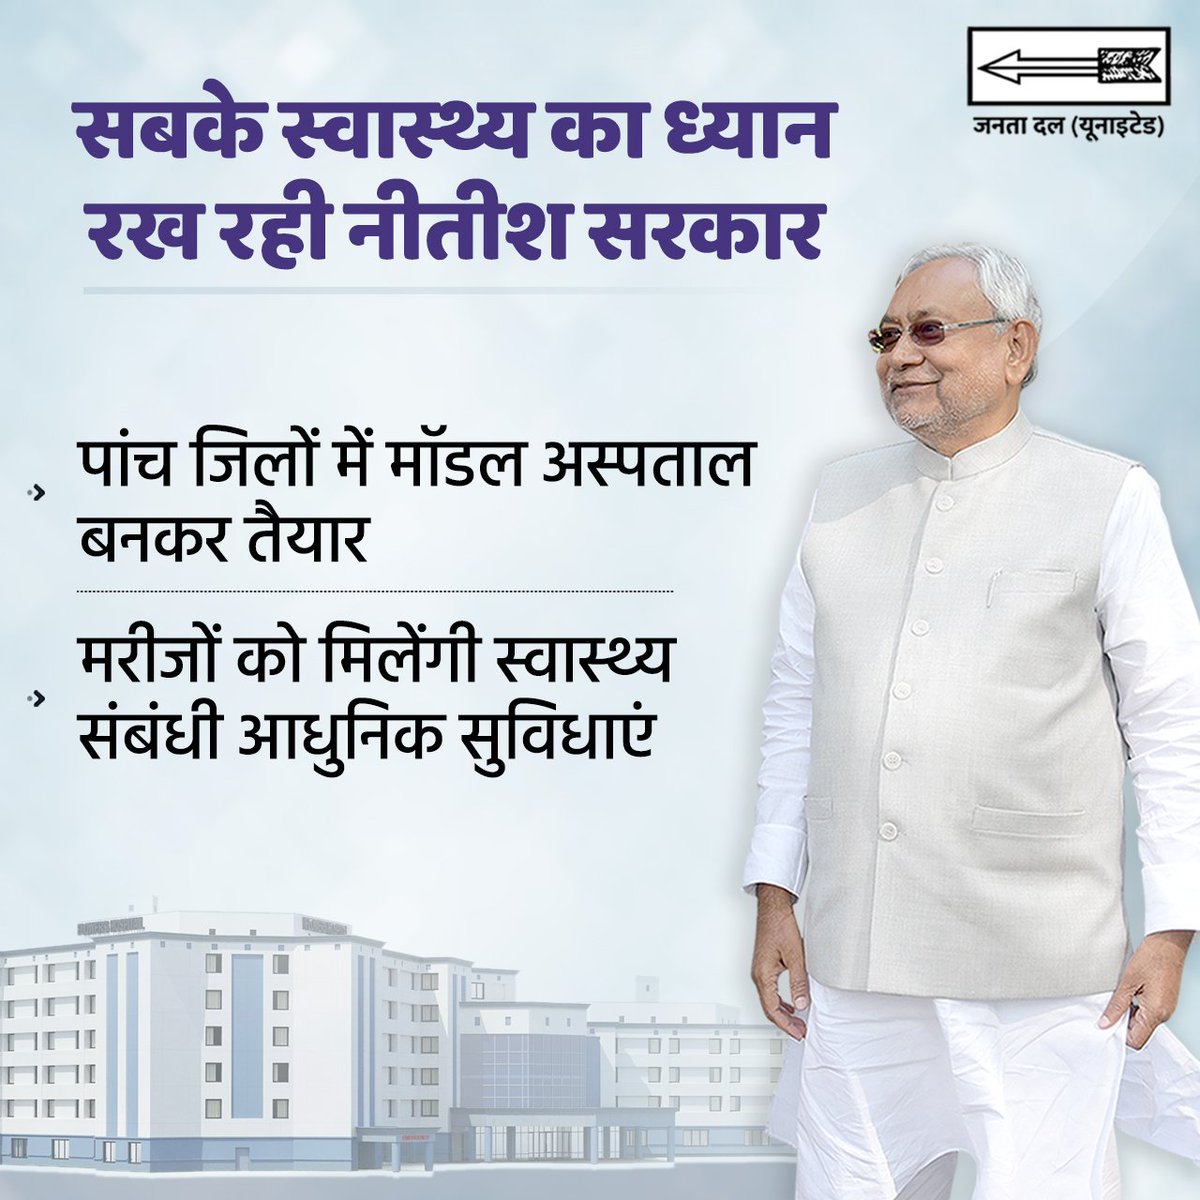 स्वस्थ बिहार, समृद्ध बिहार।
स्वास्थ्य सेवाओं को अपग्रेड कर रही नीतीश सरकार।

#JDU #NitishKumar #Bihar #healthcareinfrastructure #NitishModel